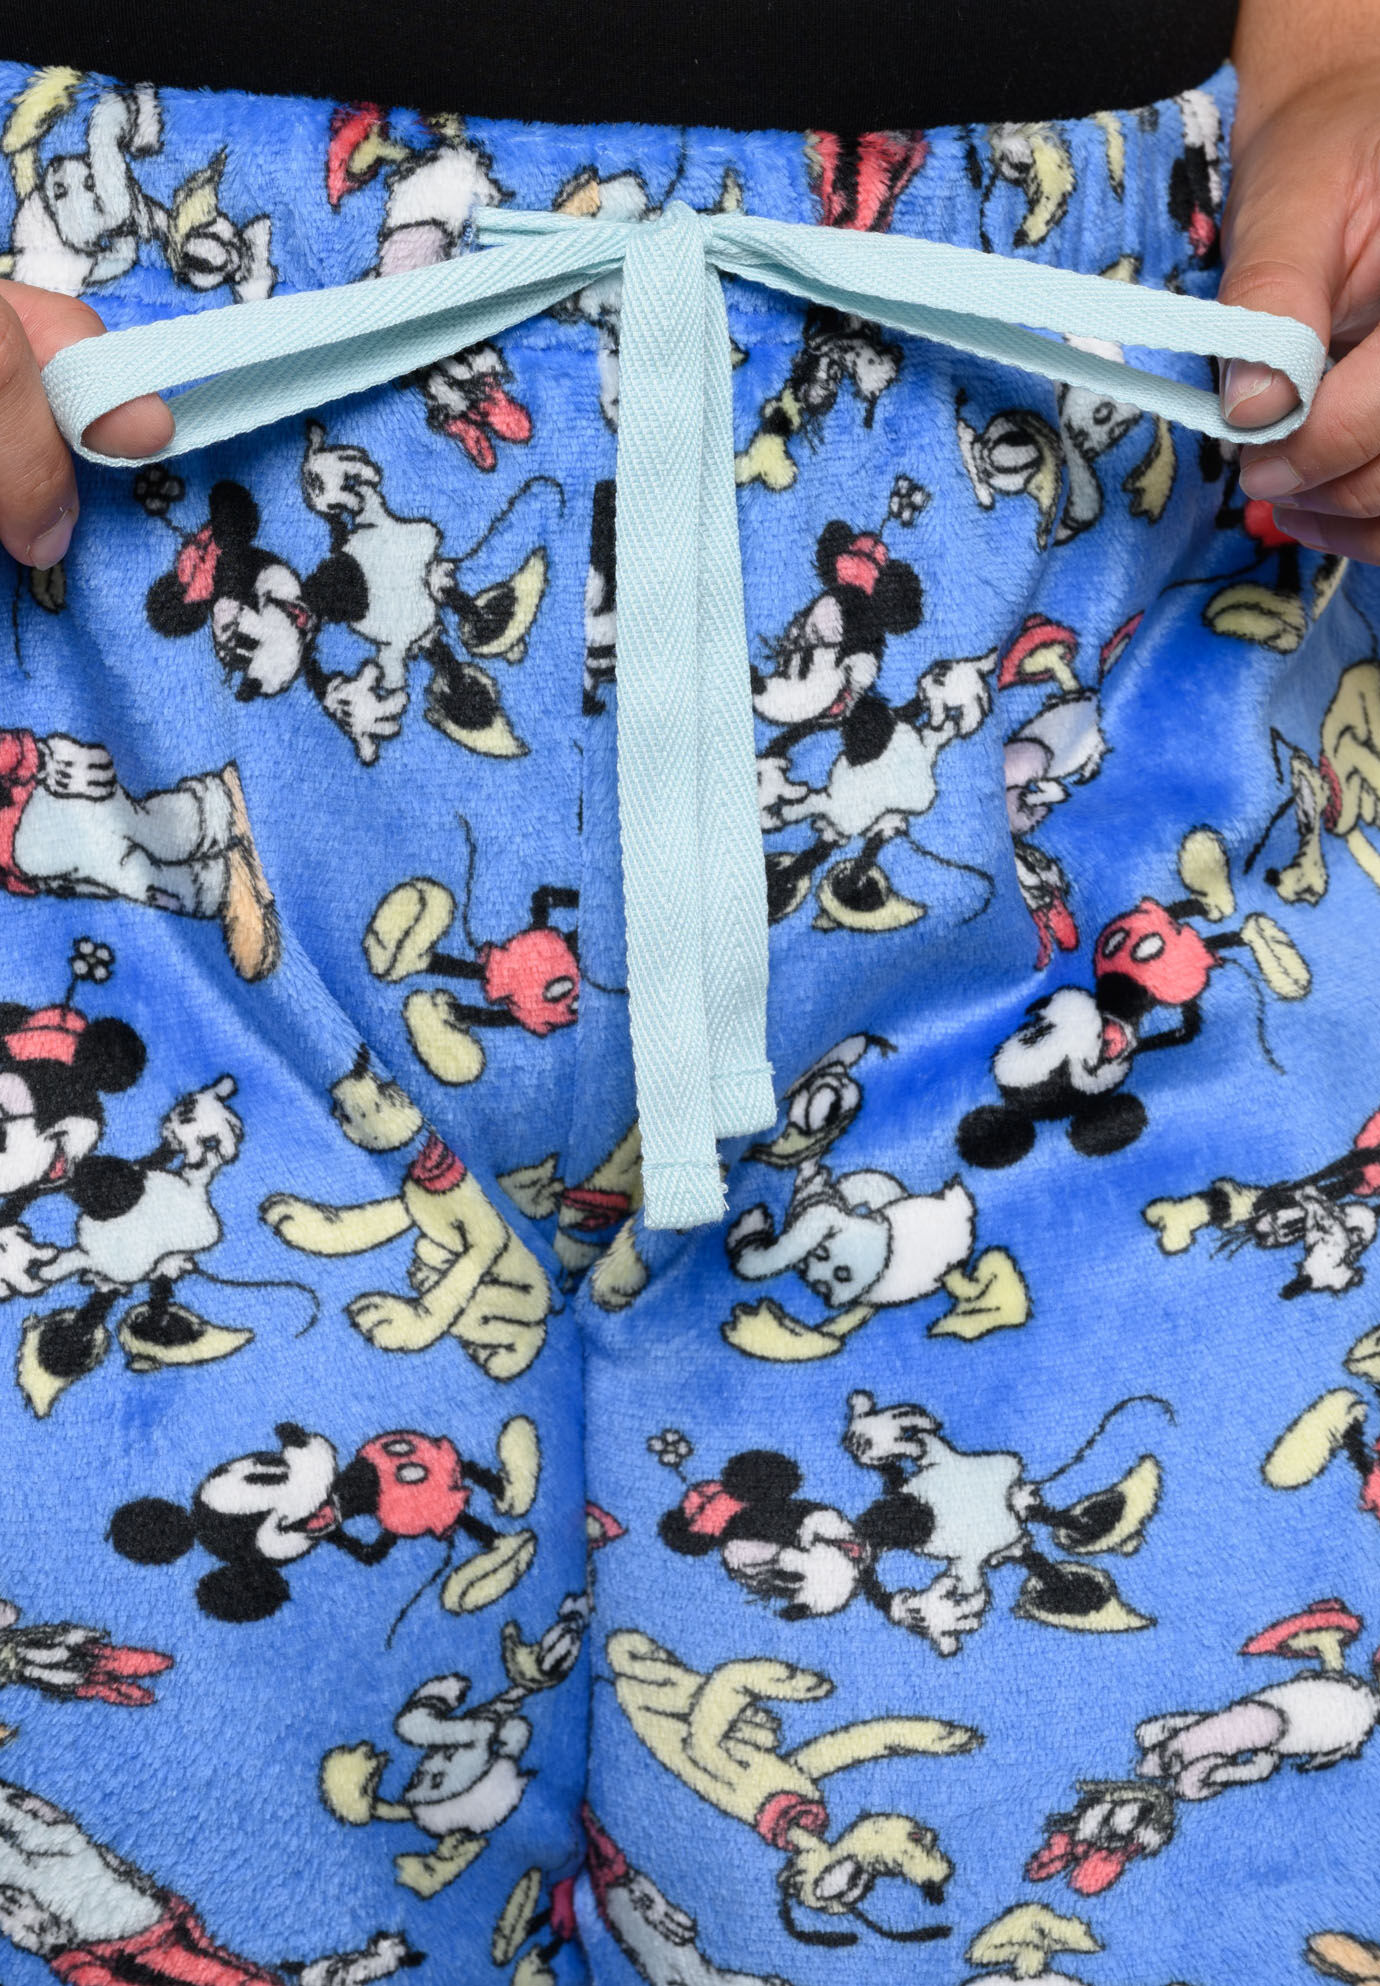 Buy Goofy Pajama online | Lazada.com.ph